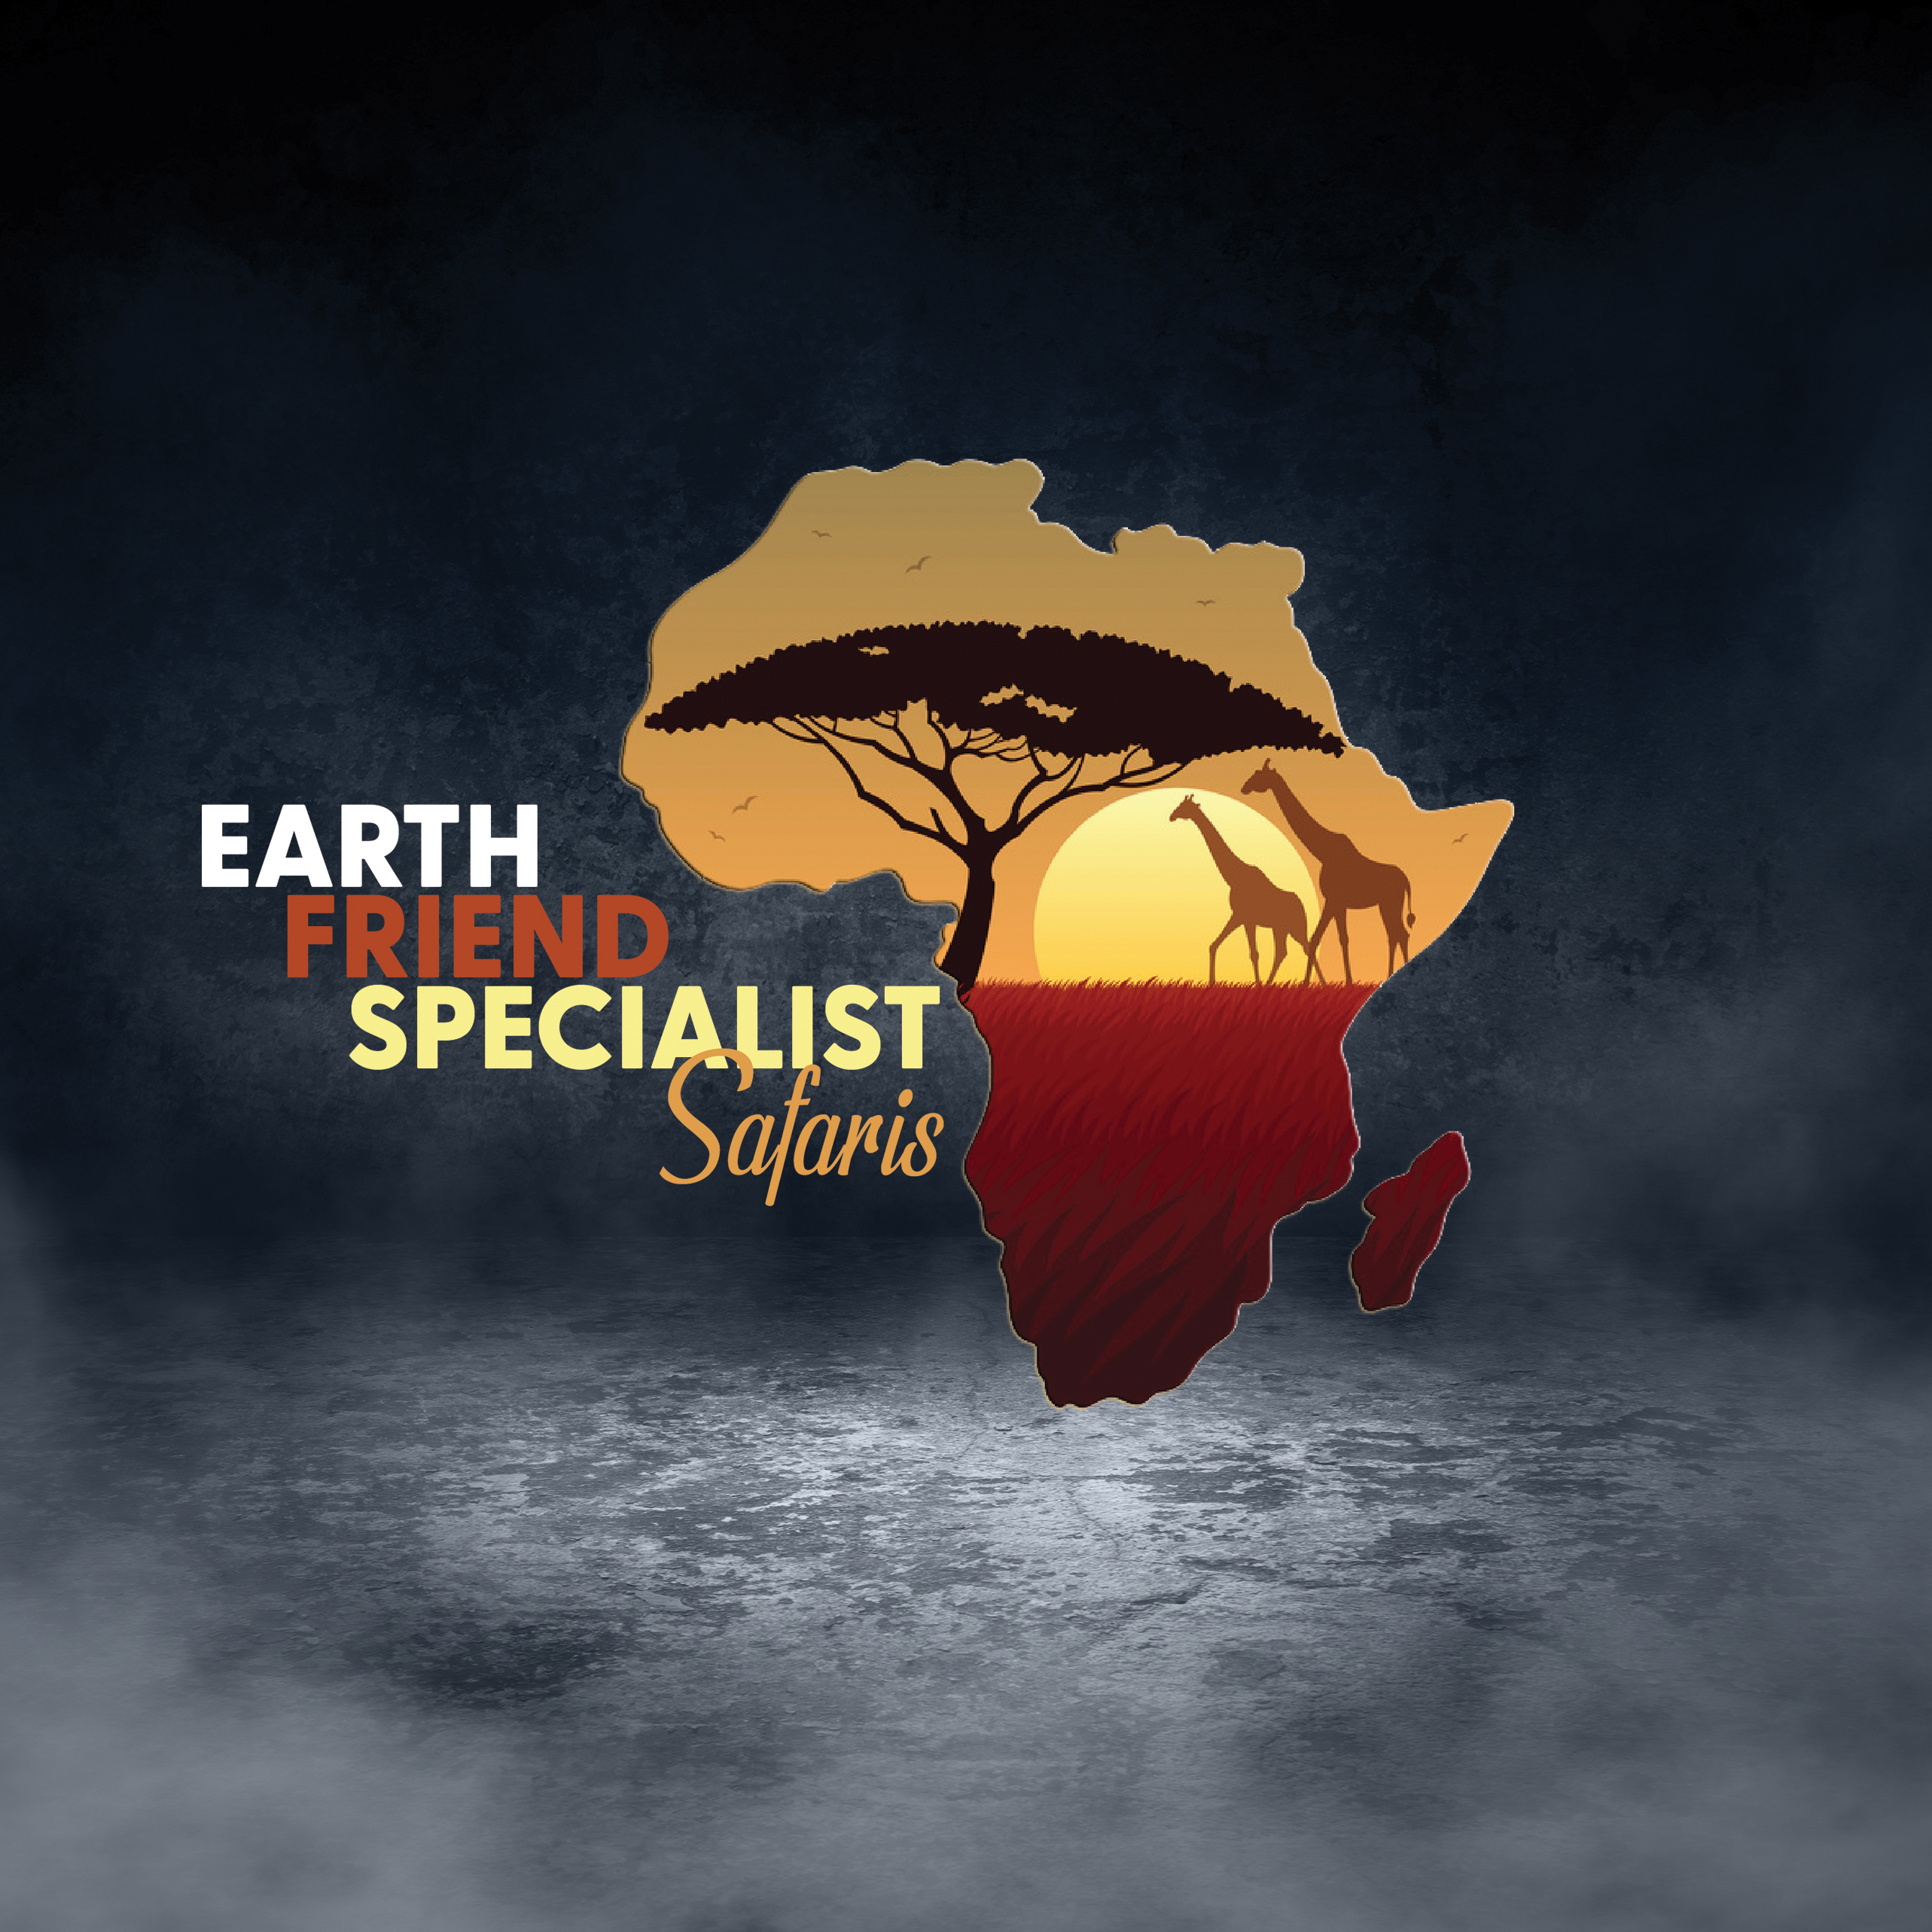 Earth Friend Specialist Safaris